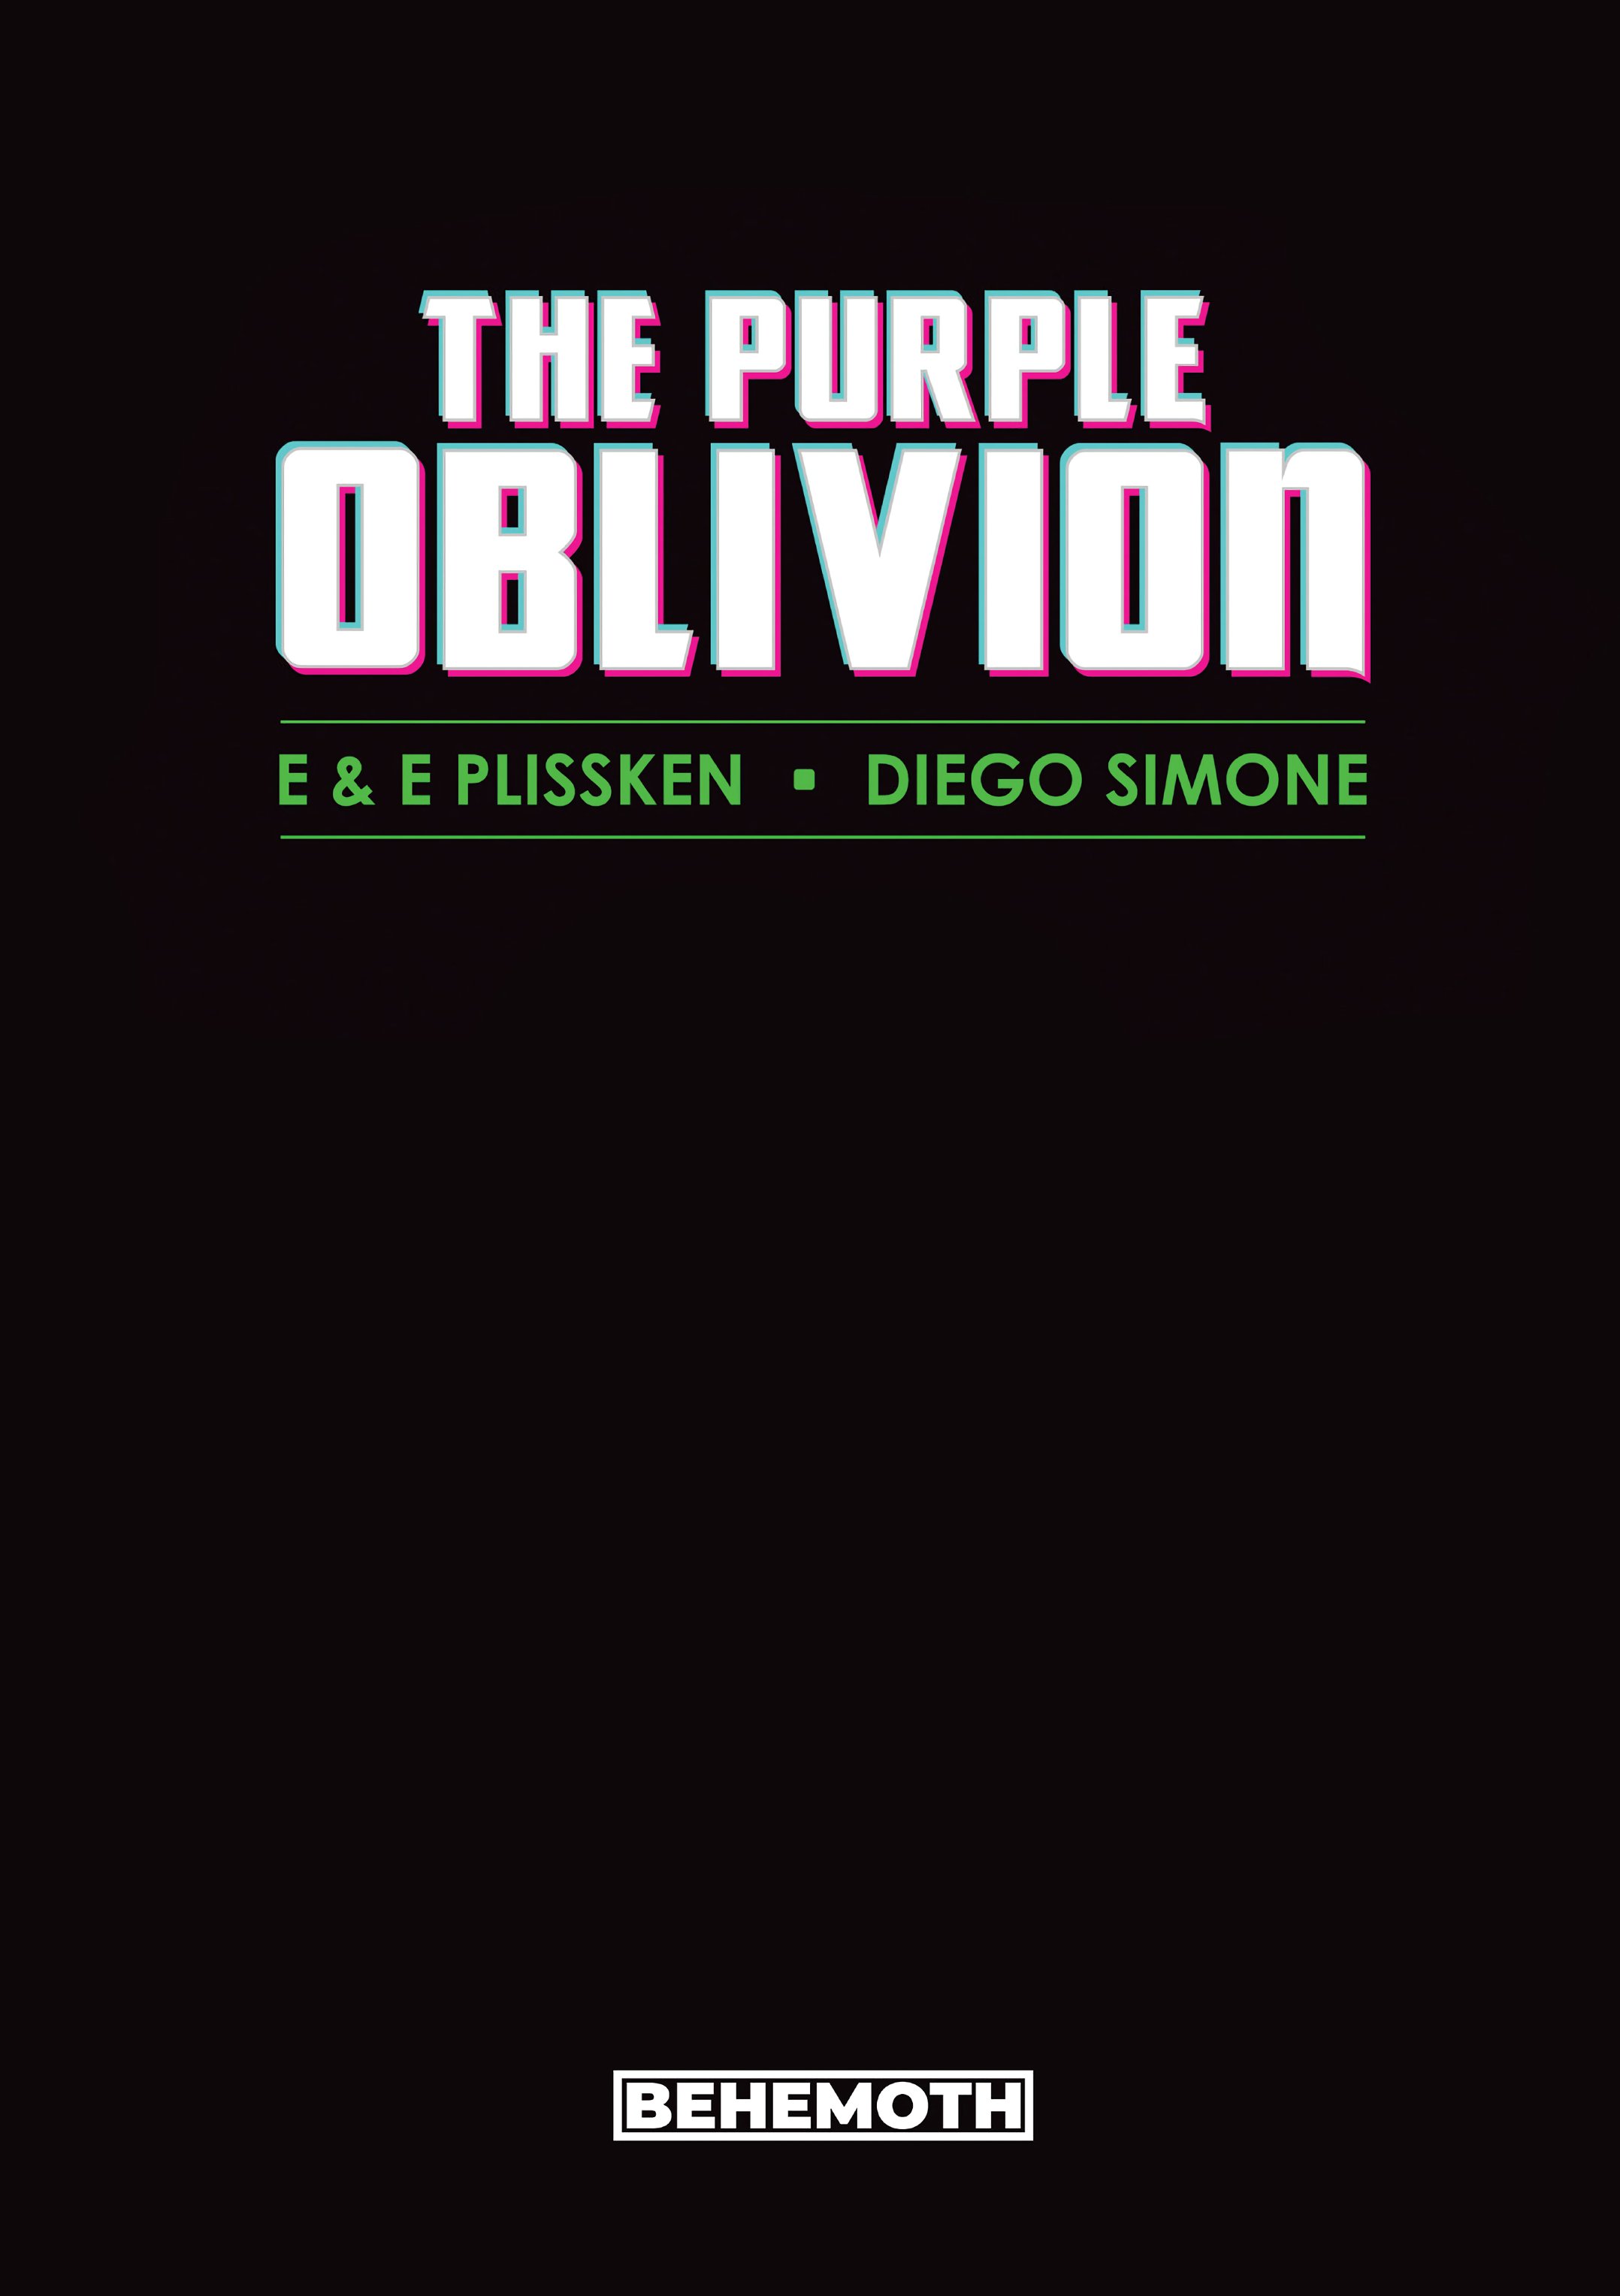 Read online The Purple Oblivion comic -  Issue # Full - 2